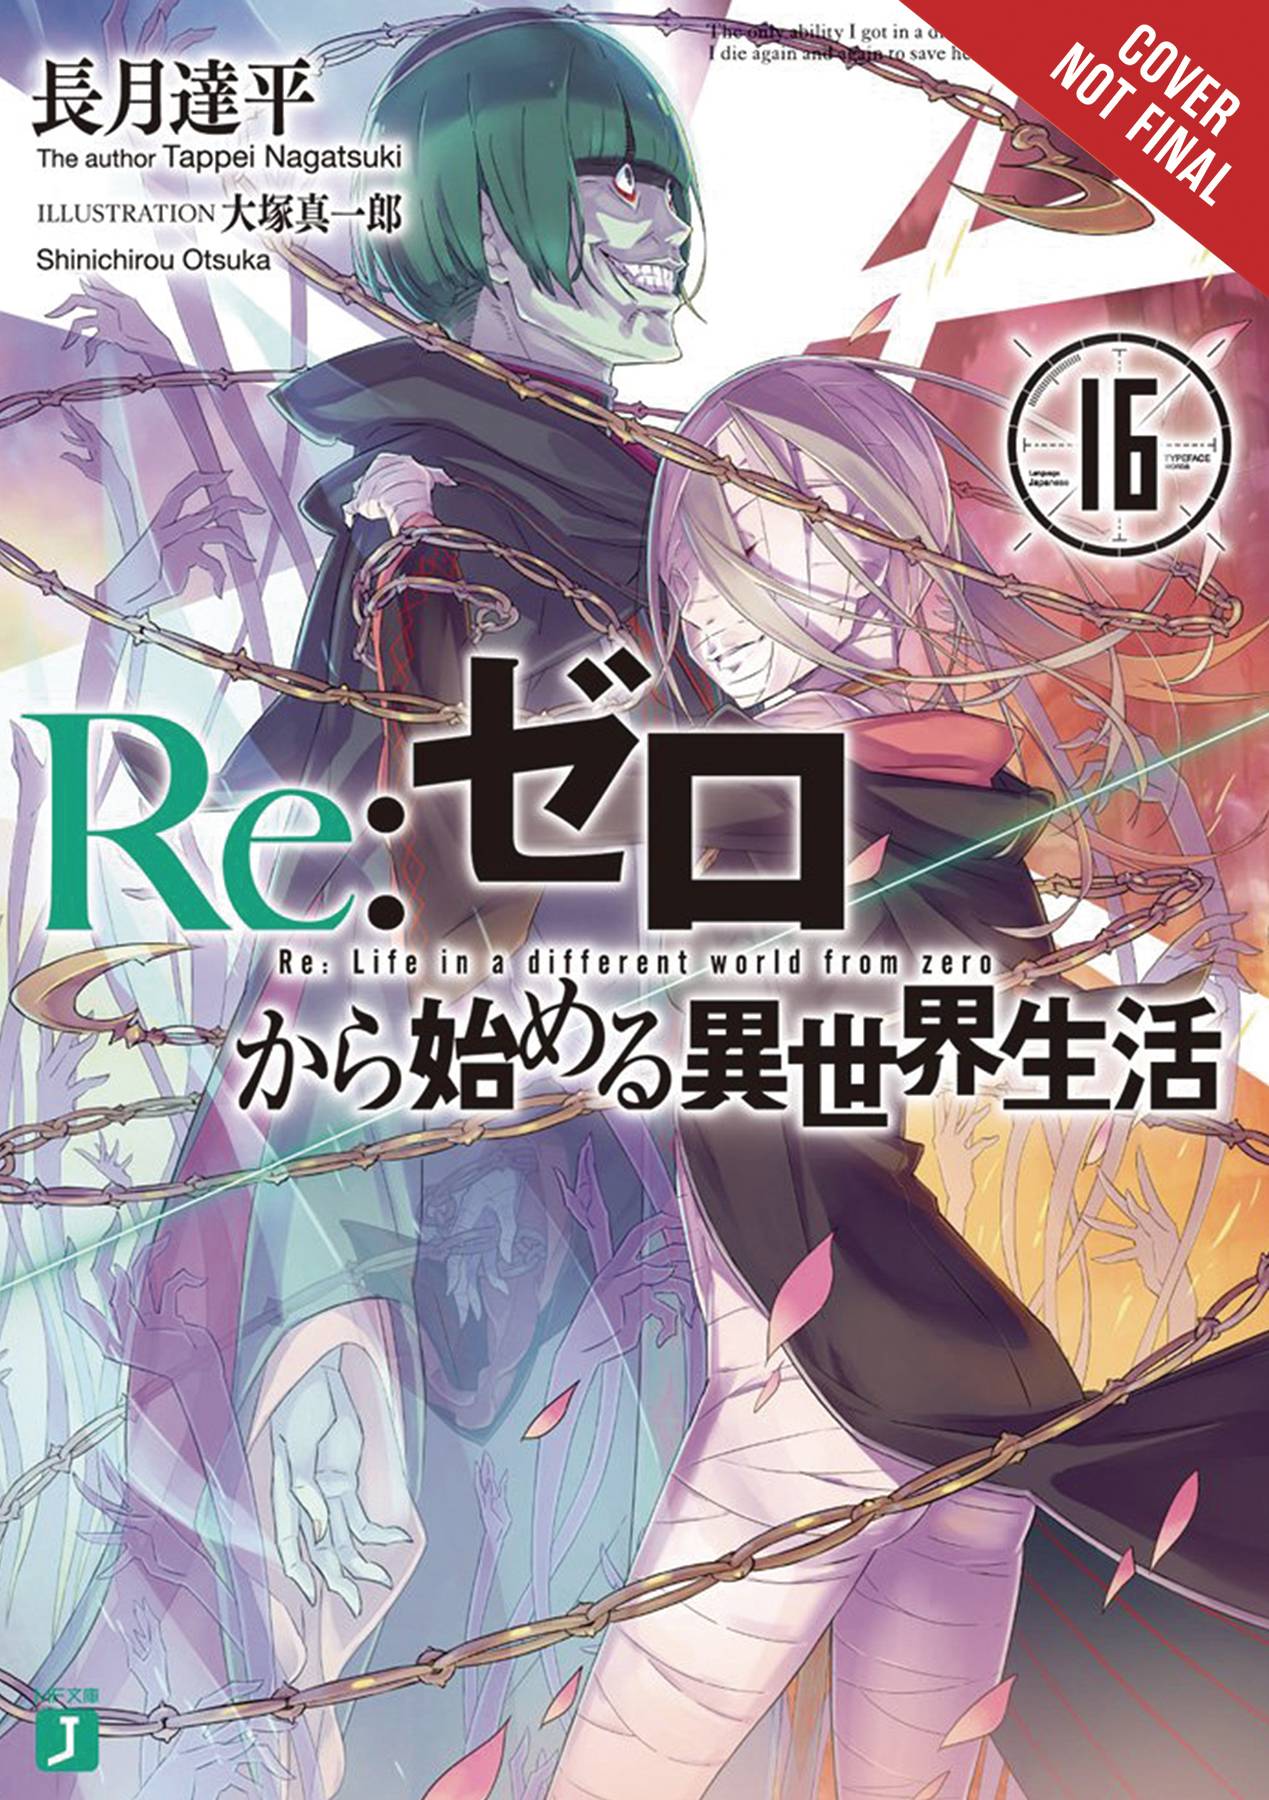 Re:ZERO -Starting Life in Another World- Ex (Light Novel) Manga